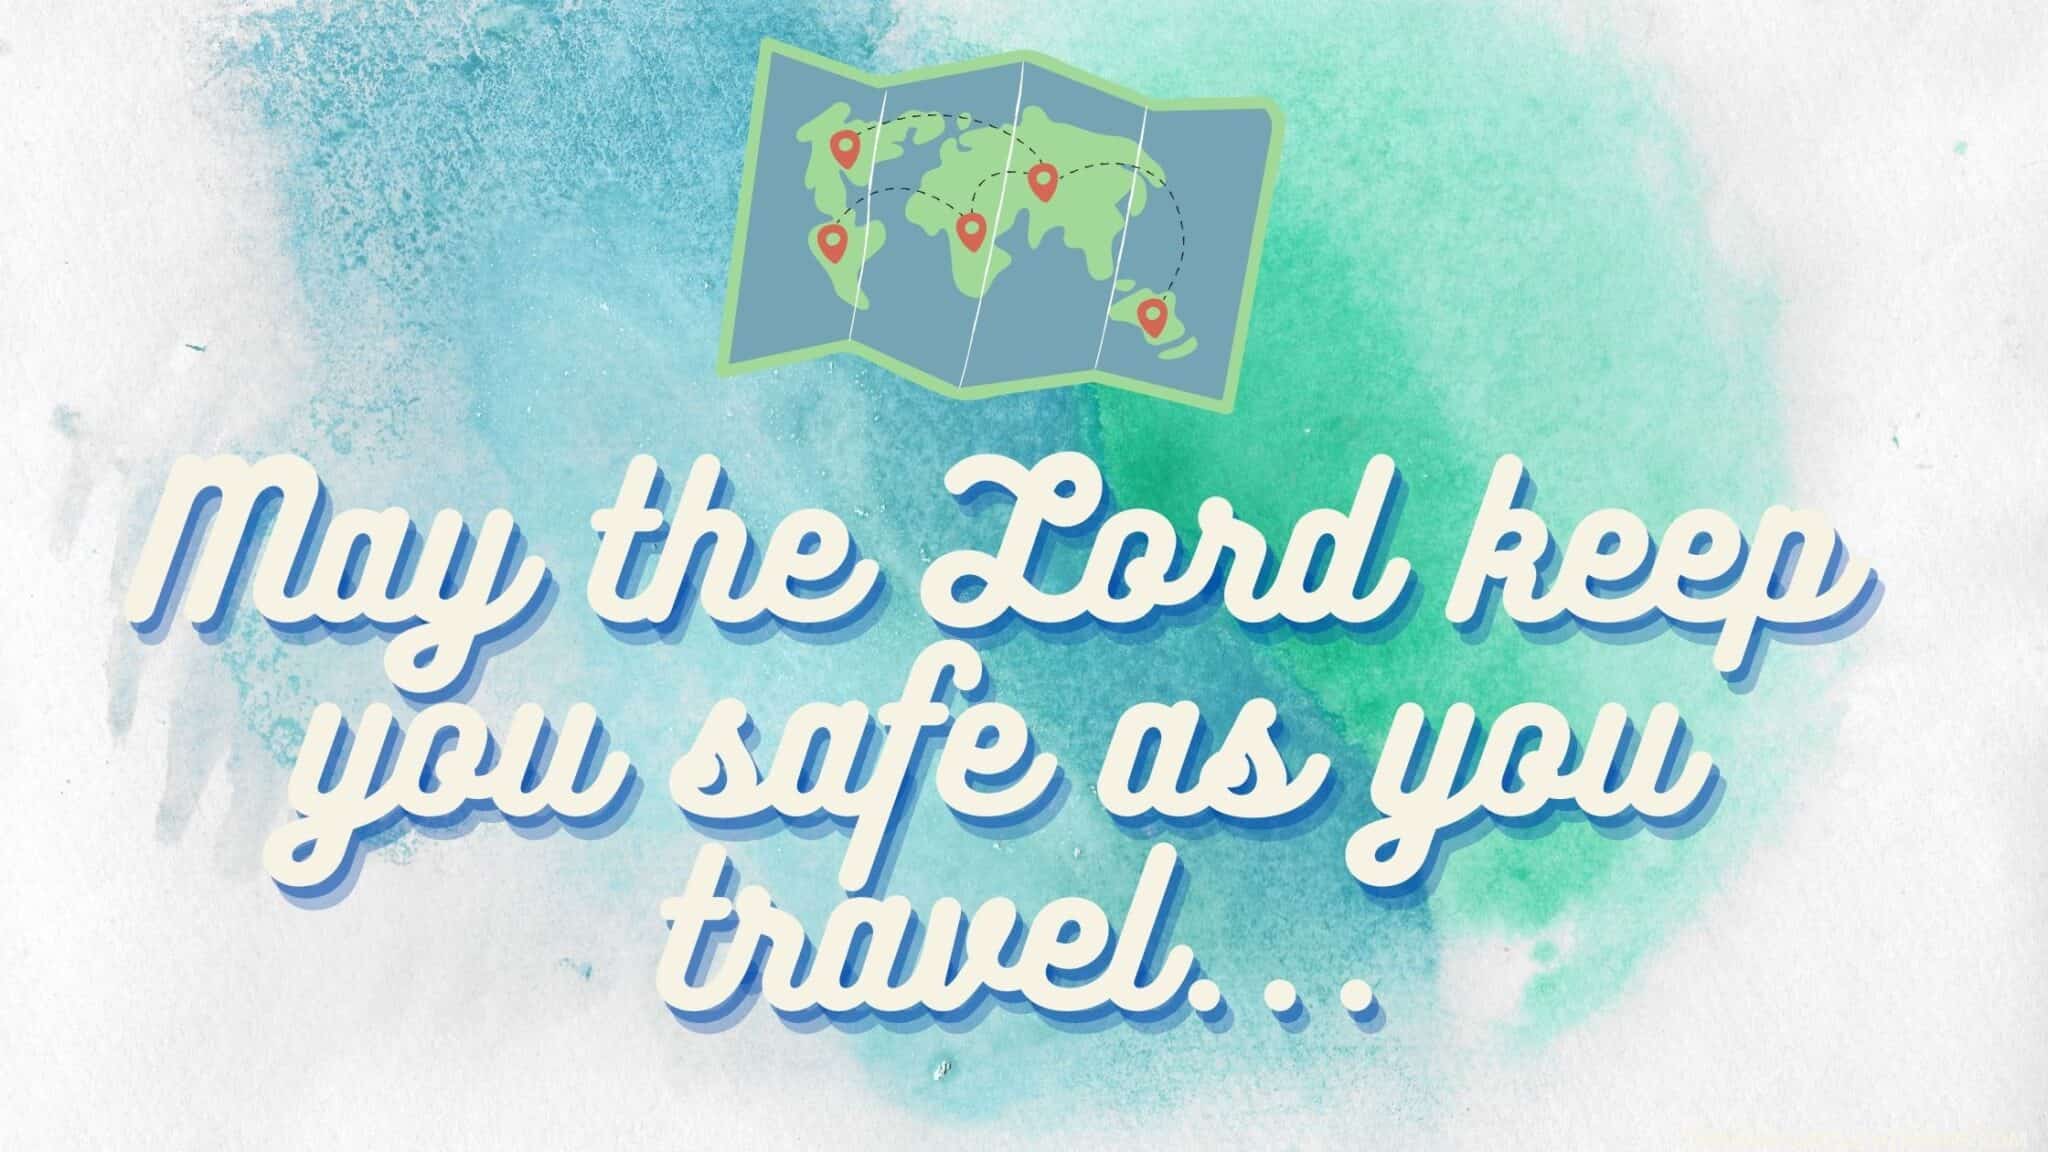 prayer for a safe trip images